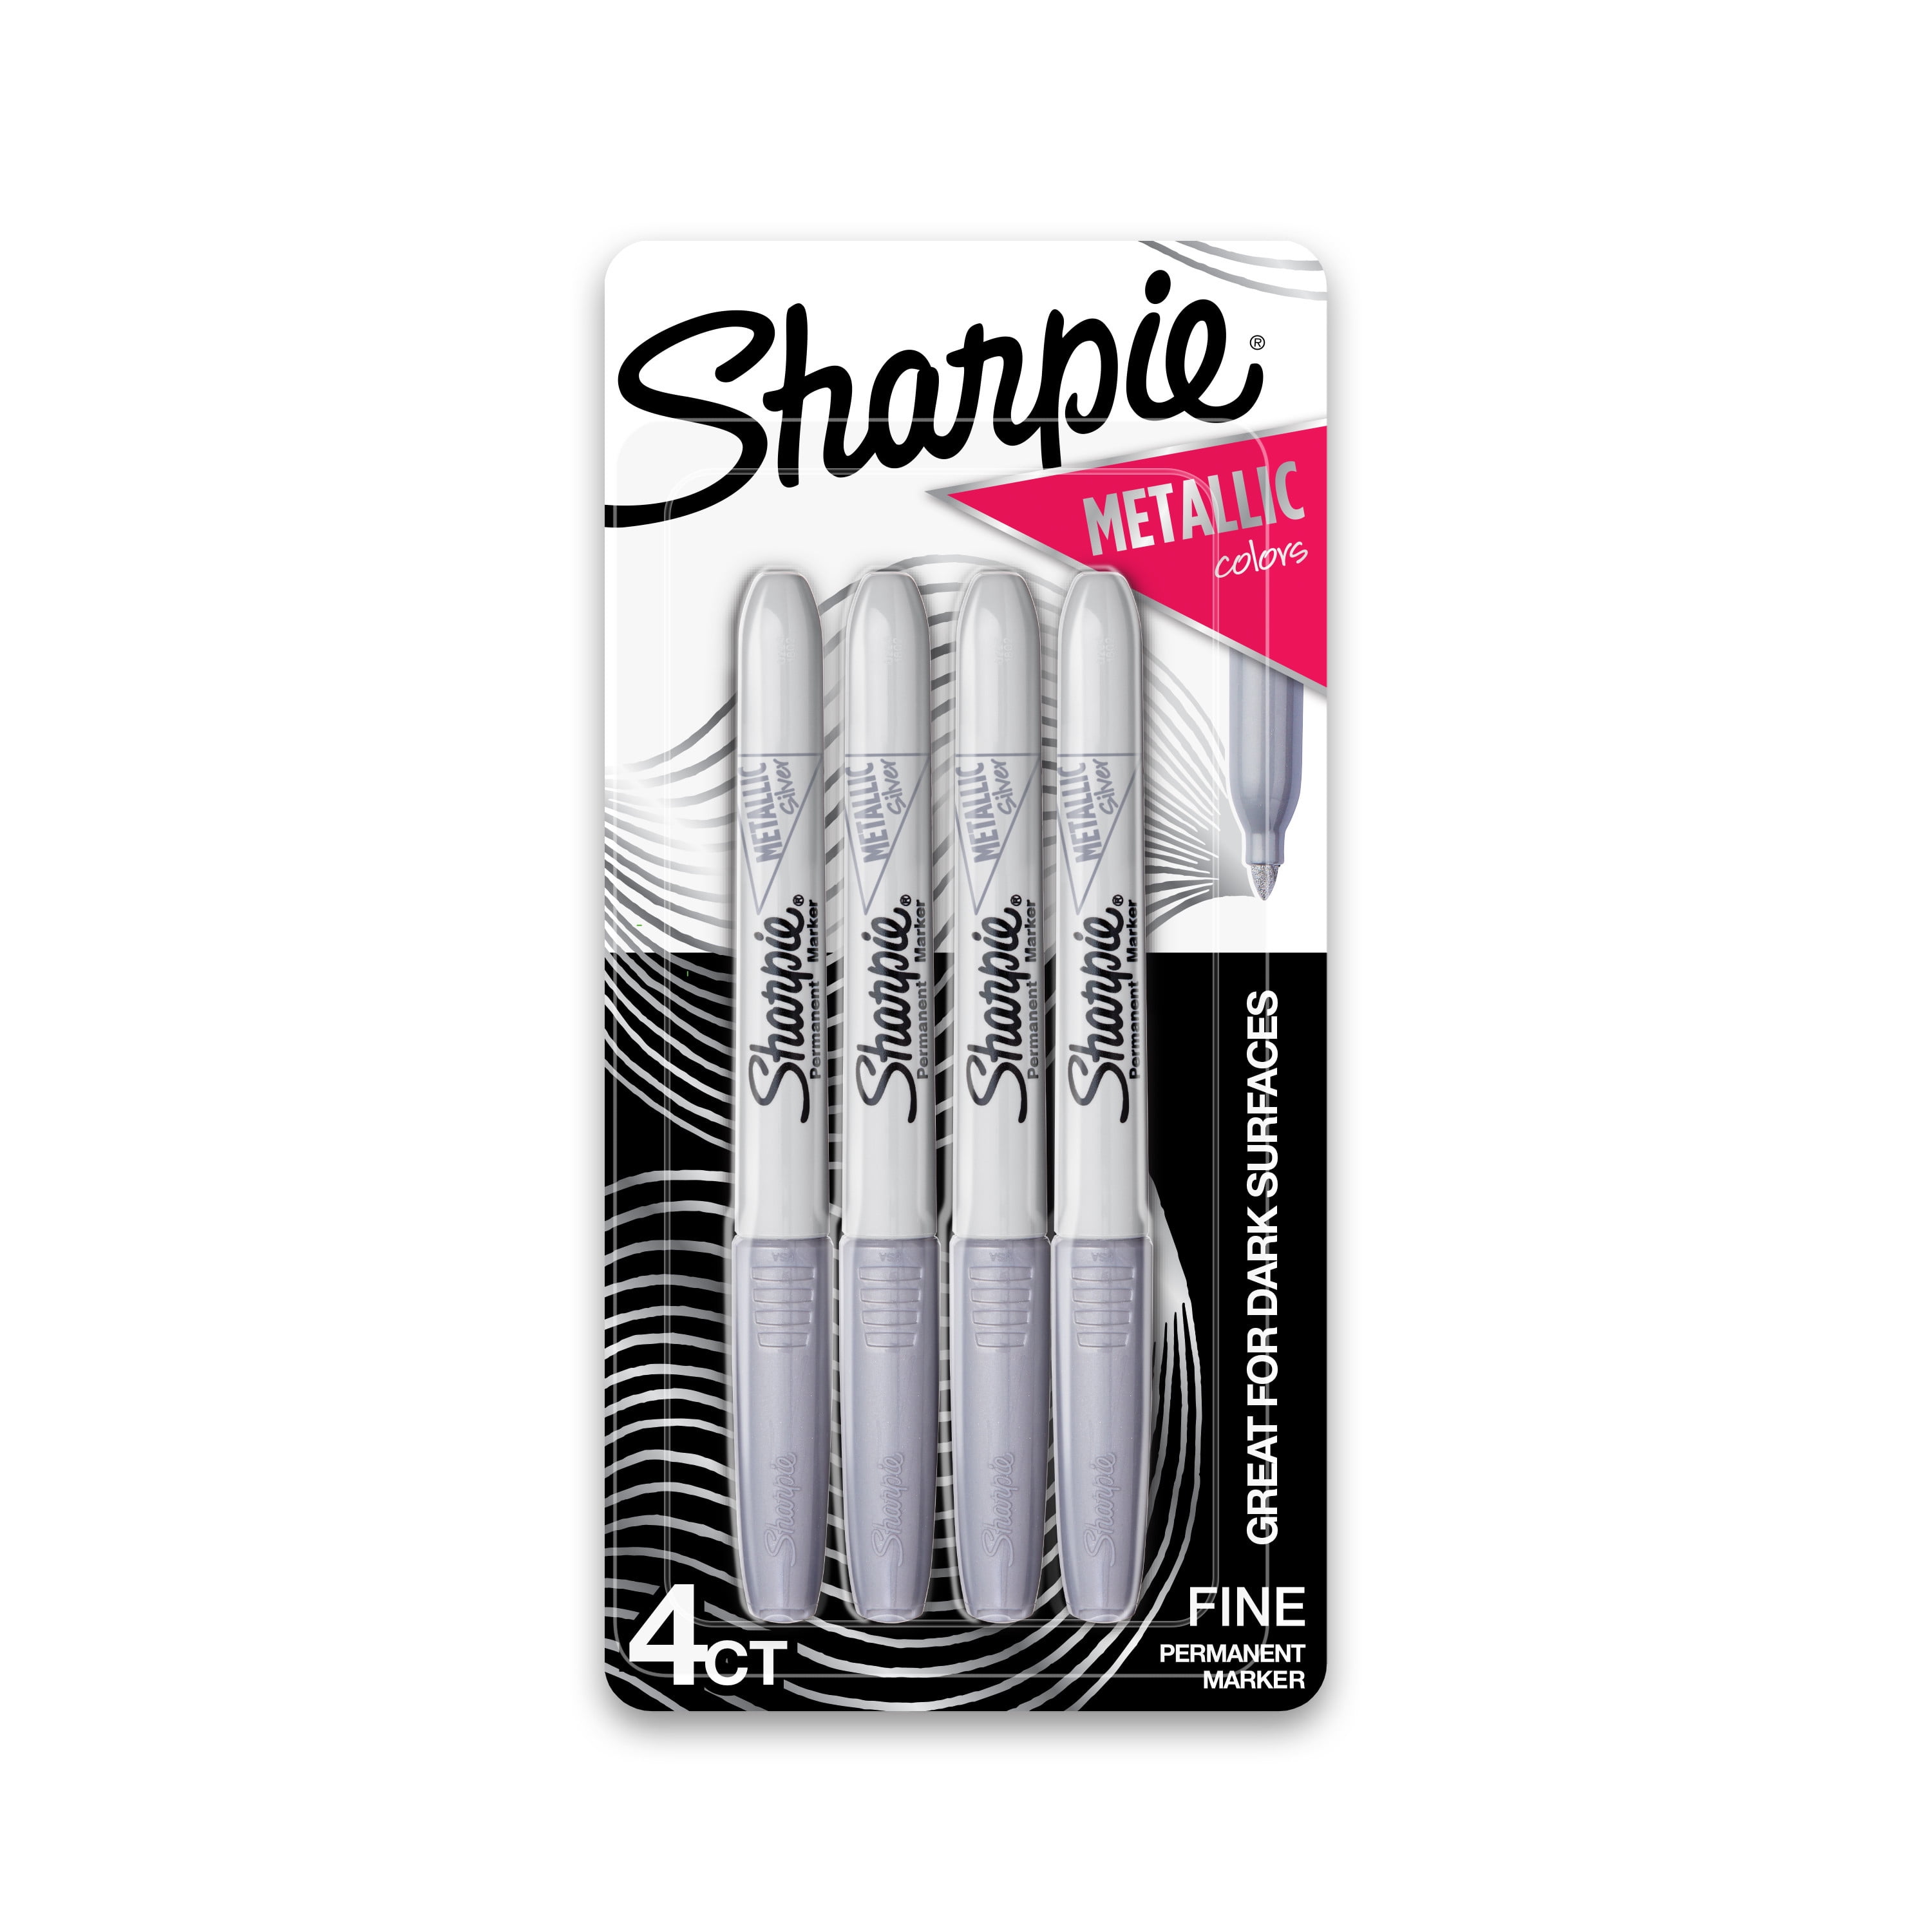 Sharpie - Wet Surface Pen Marker: Metallic Silver, AP Non-Toxic, Fine Point  - 73261273 - MSC Industrial Supply